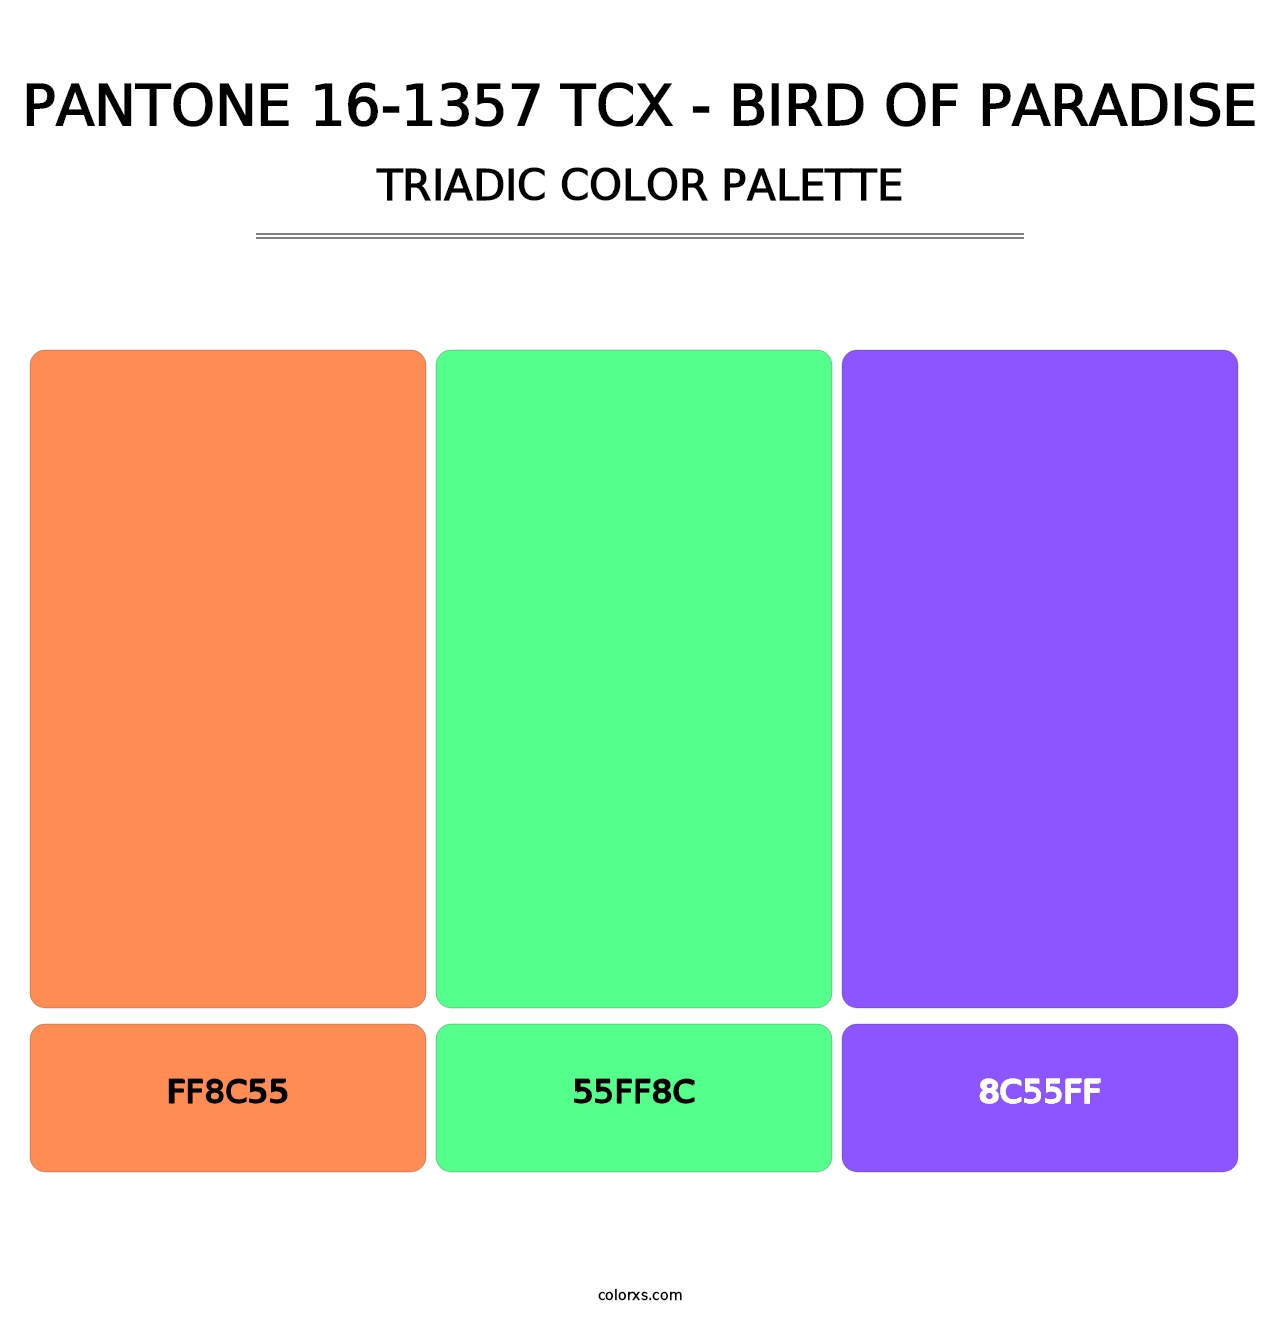 PANTONE 16-1357 TCX - Bird of Paradise - Triadic Color Palette